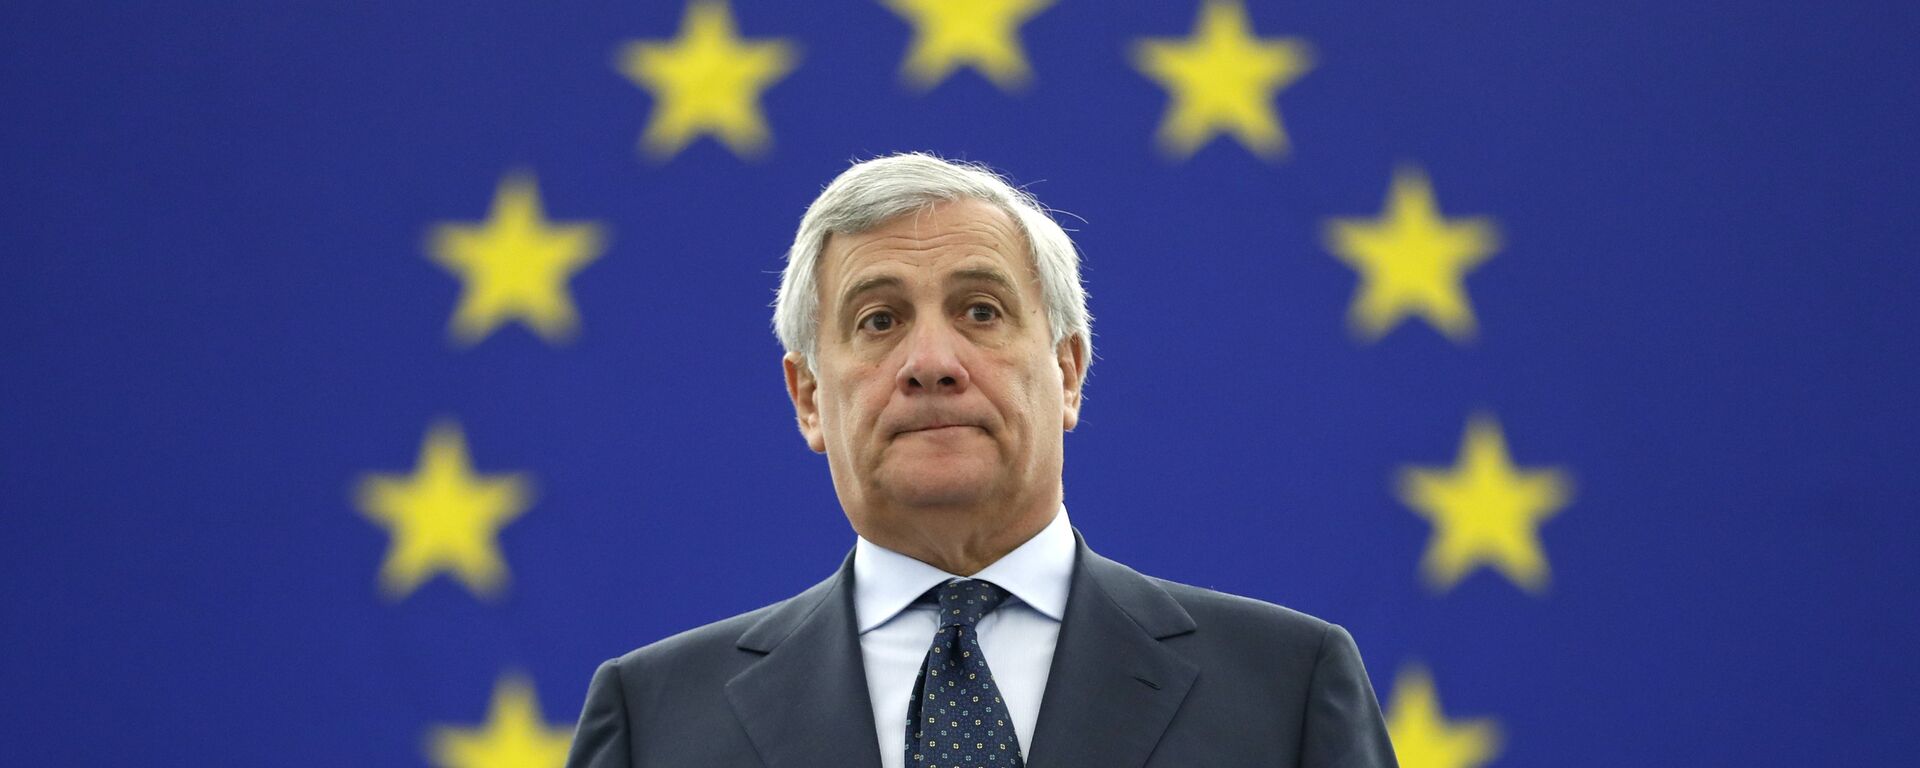 Predsednik Evropskog parlamenta Antonio Tajani - Sputnik Srbija, 1920, 14.03.2019